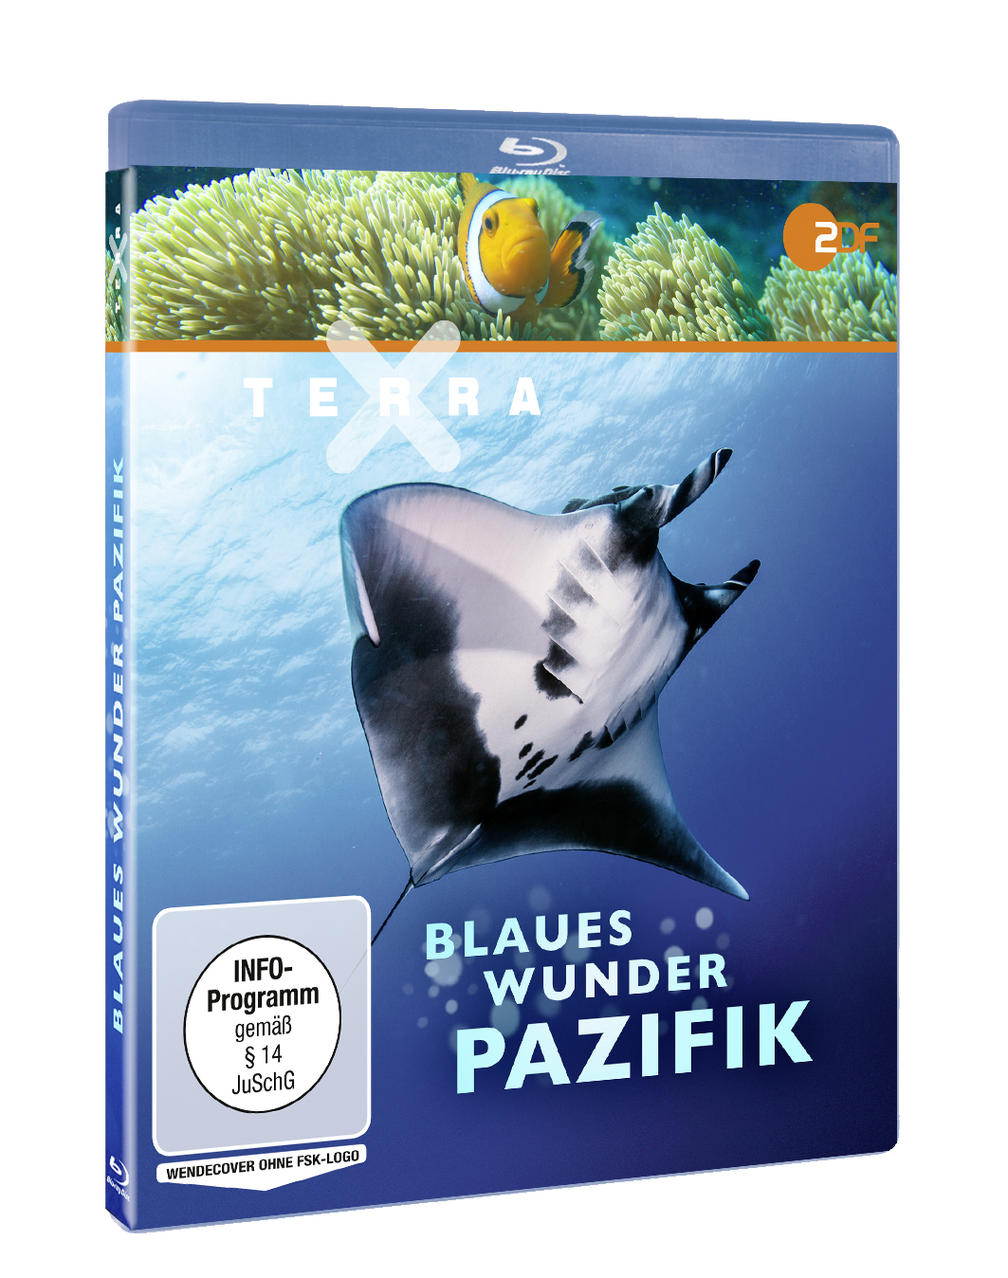 X: Pazifik Blu-ray Terra Wunder Blaues